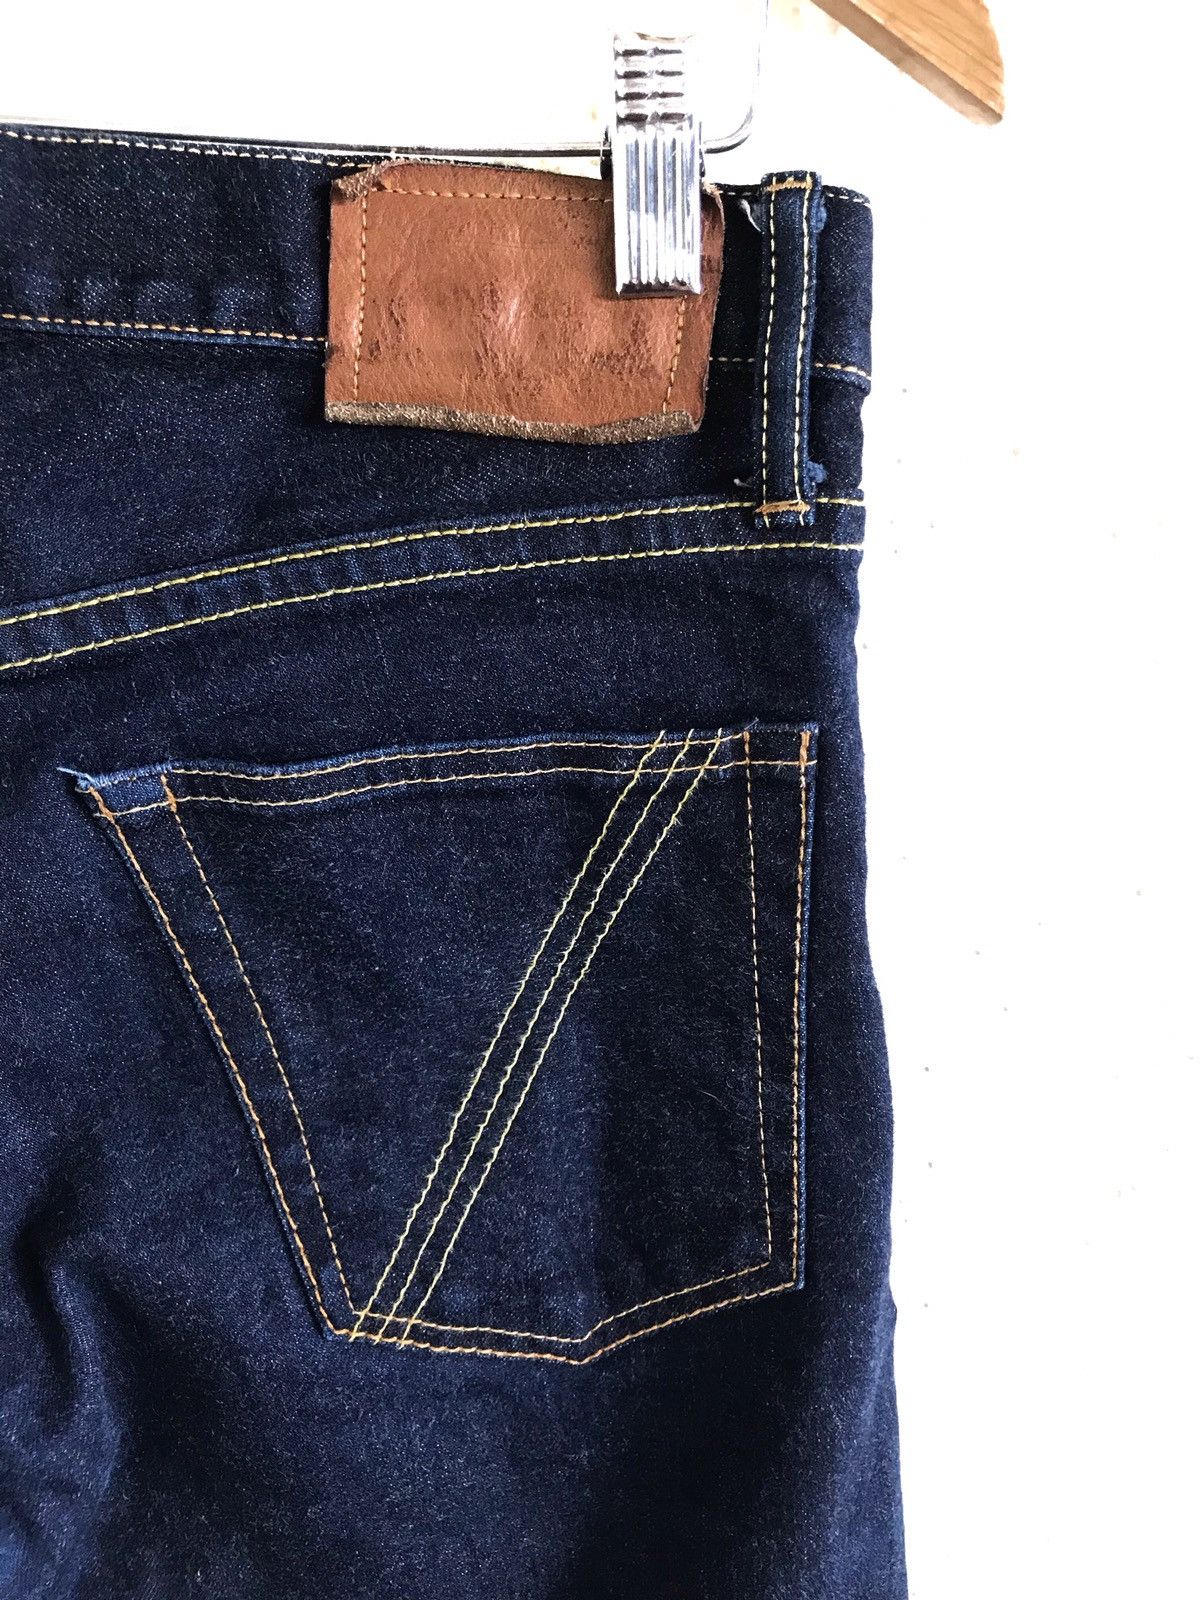 VANQUISH Japan Selvedge Skinny Jeans - 8